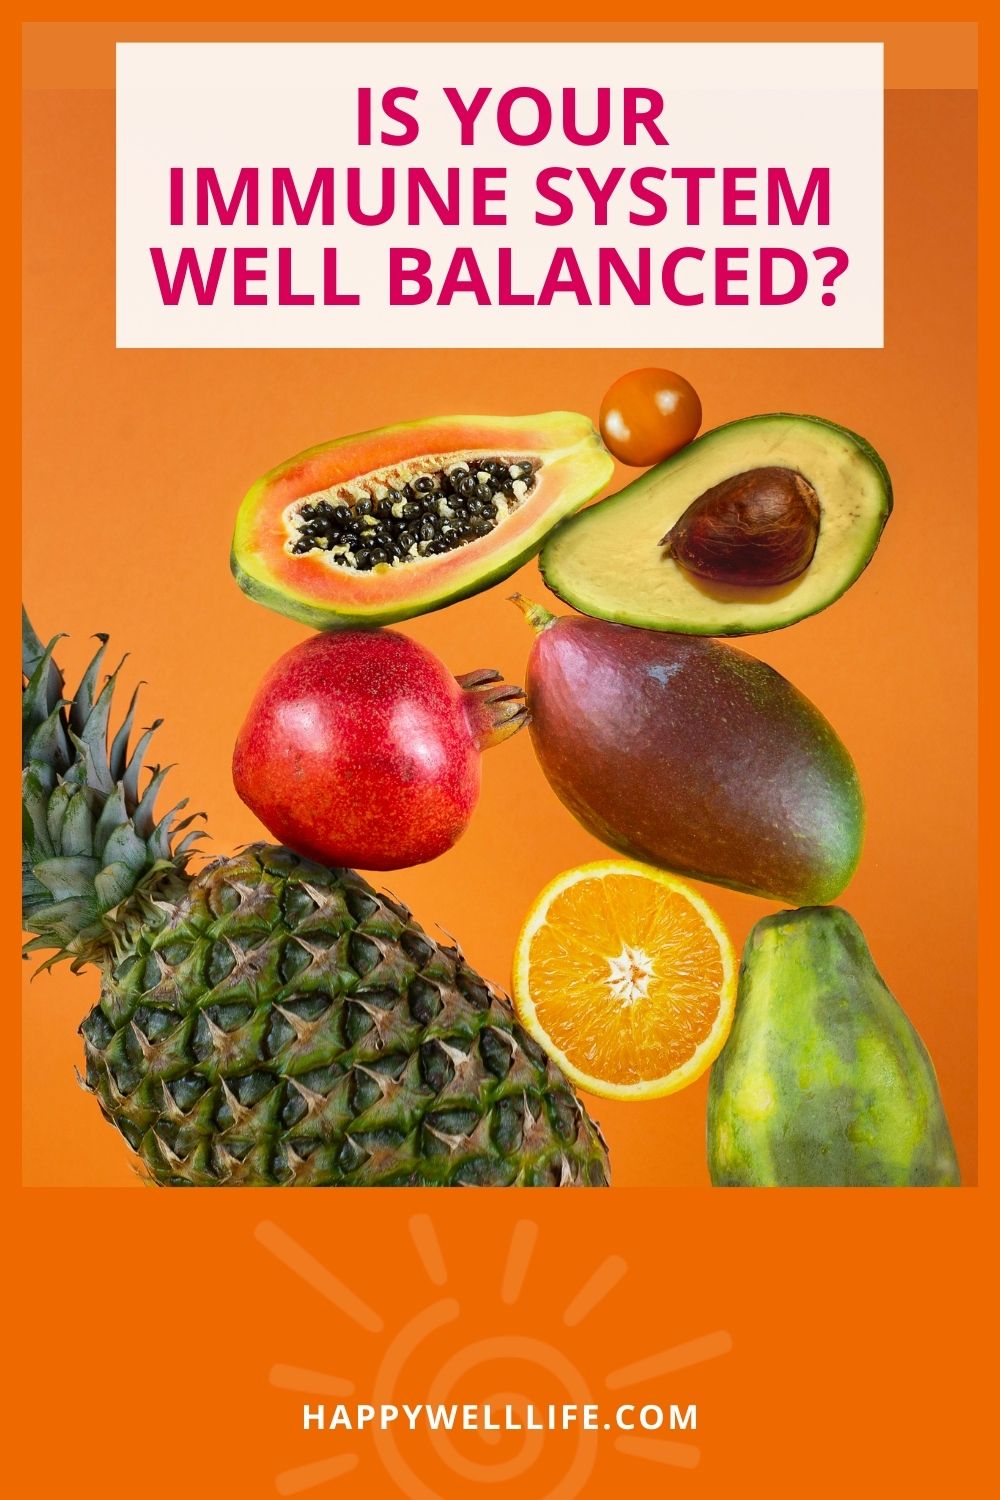 Eat Well to Balance Immune System - image of balanced fruits